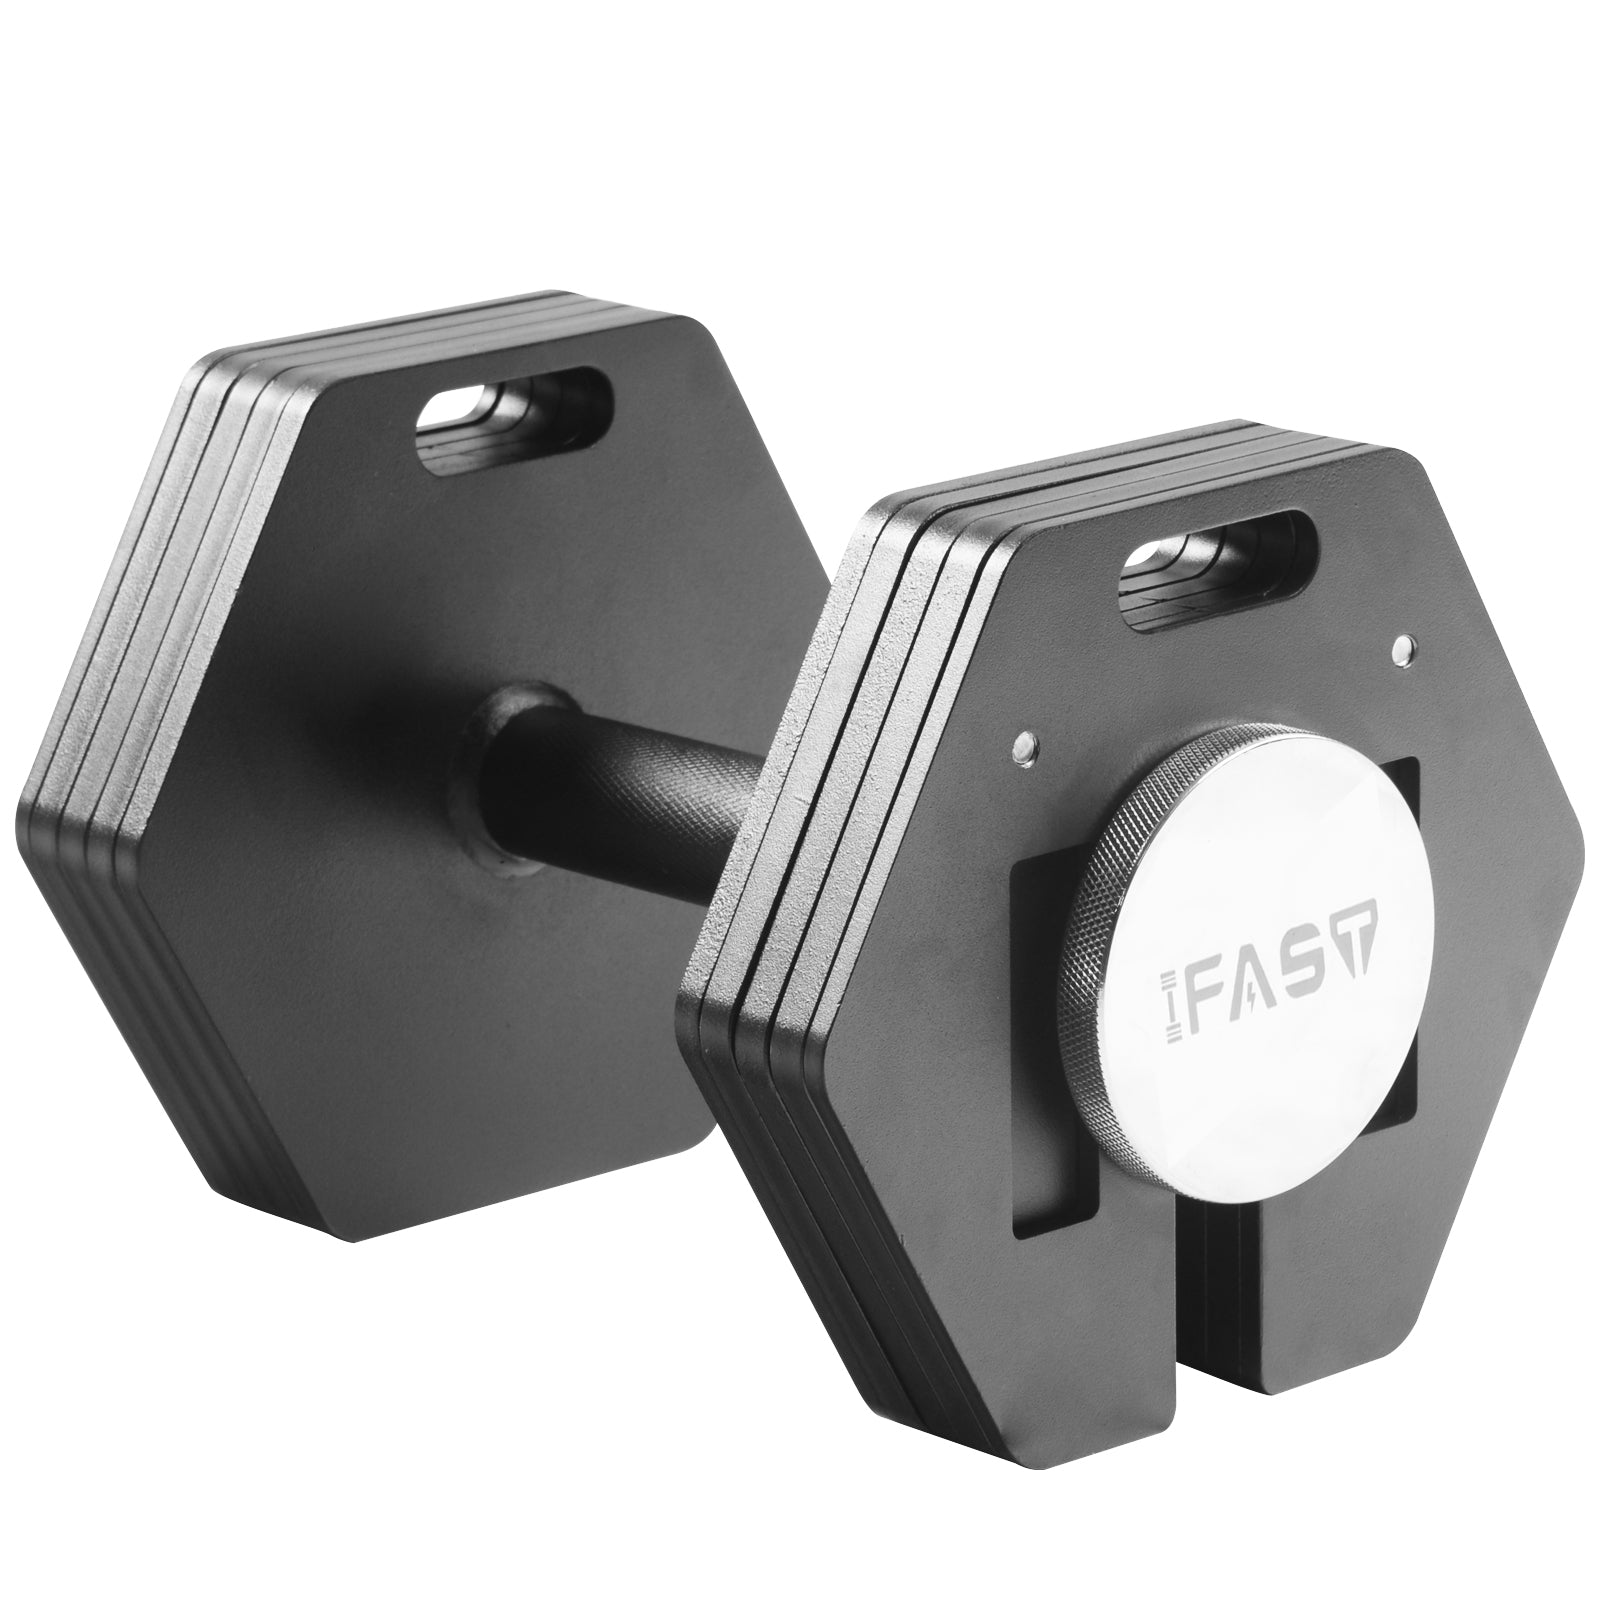 IFAST Quick-Lock Adjustable Dumbbells